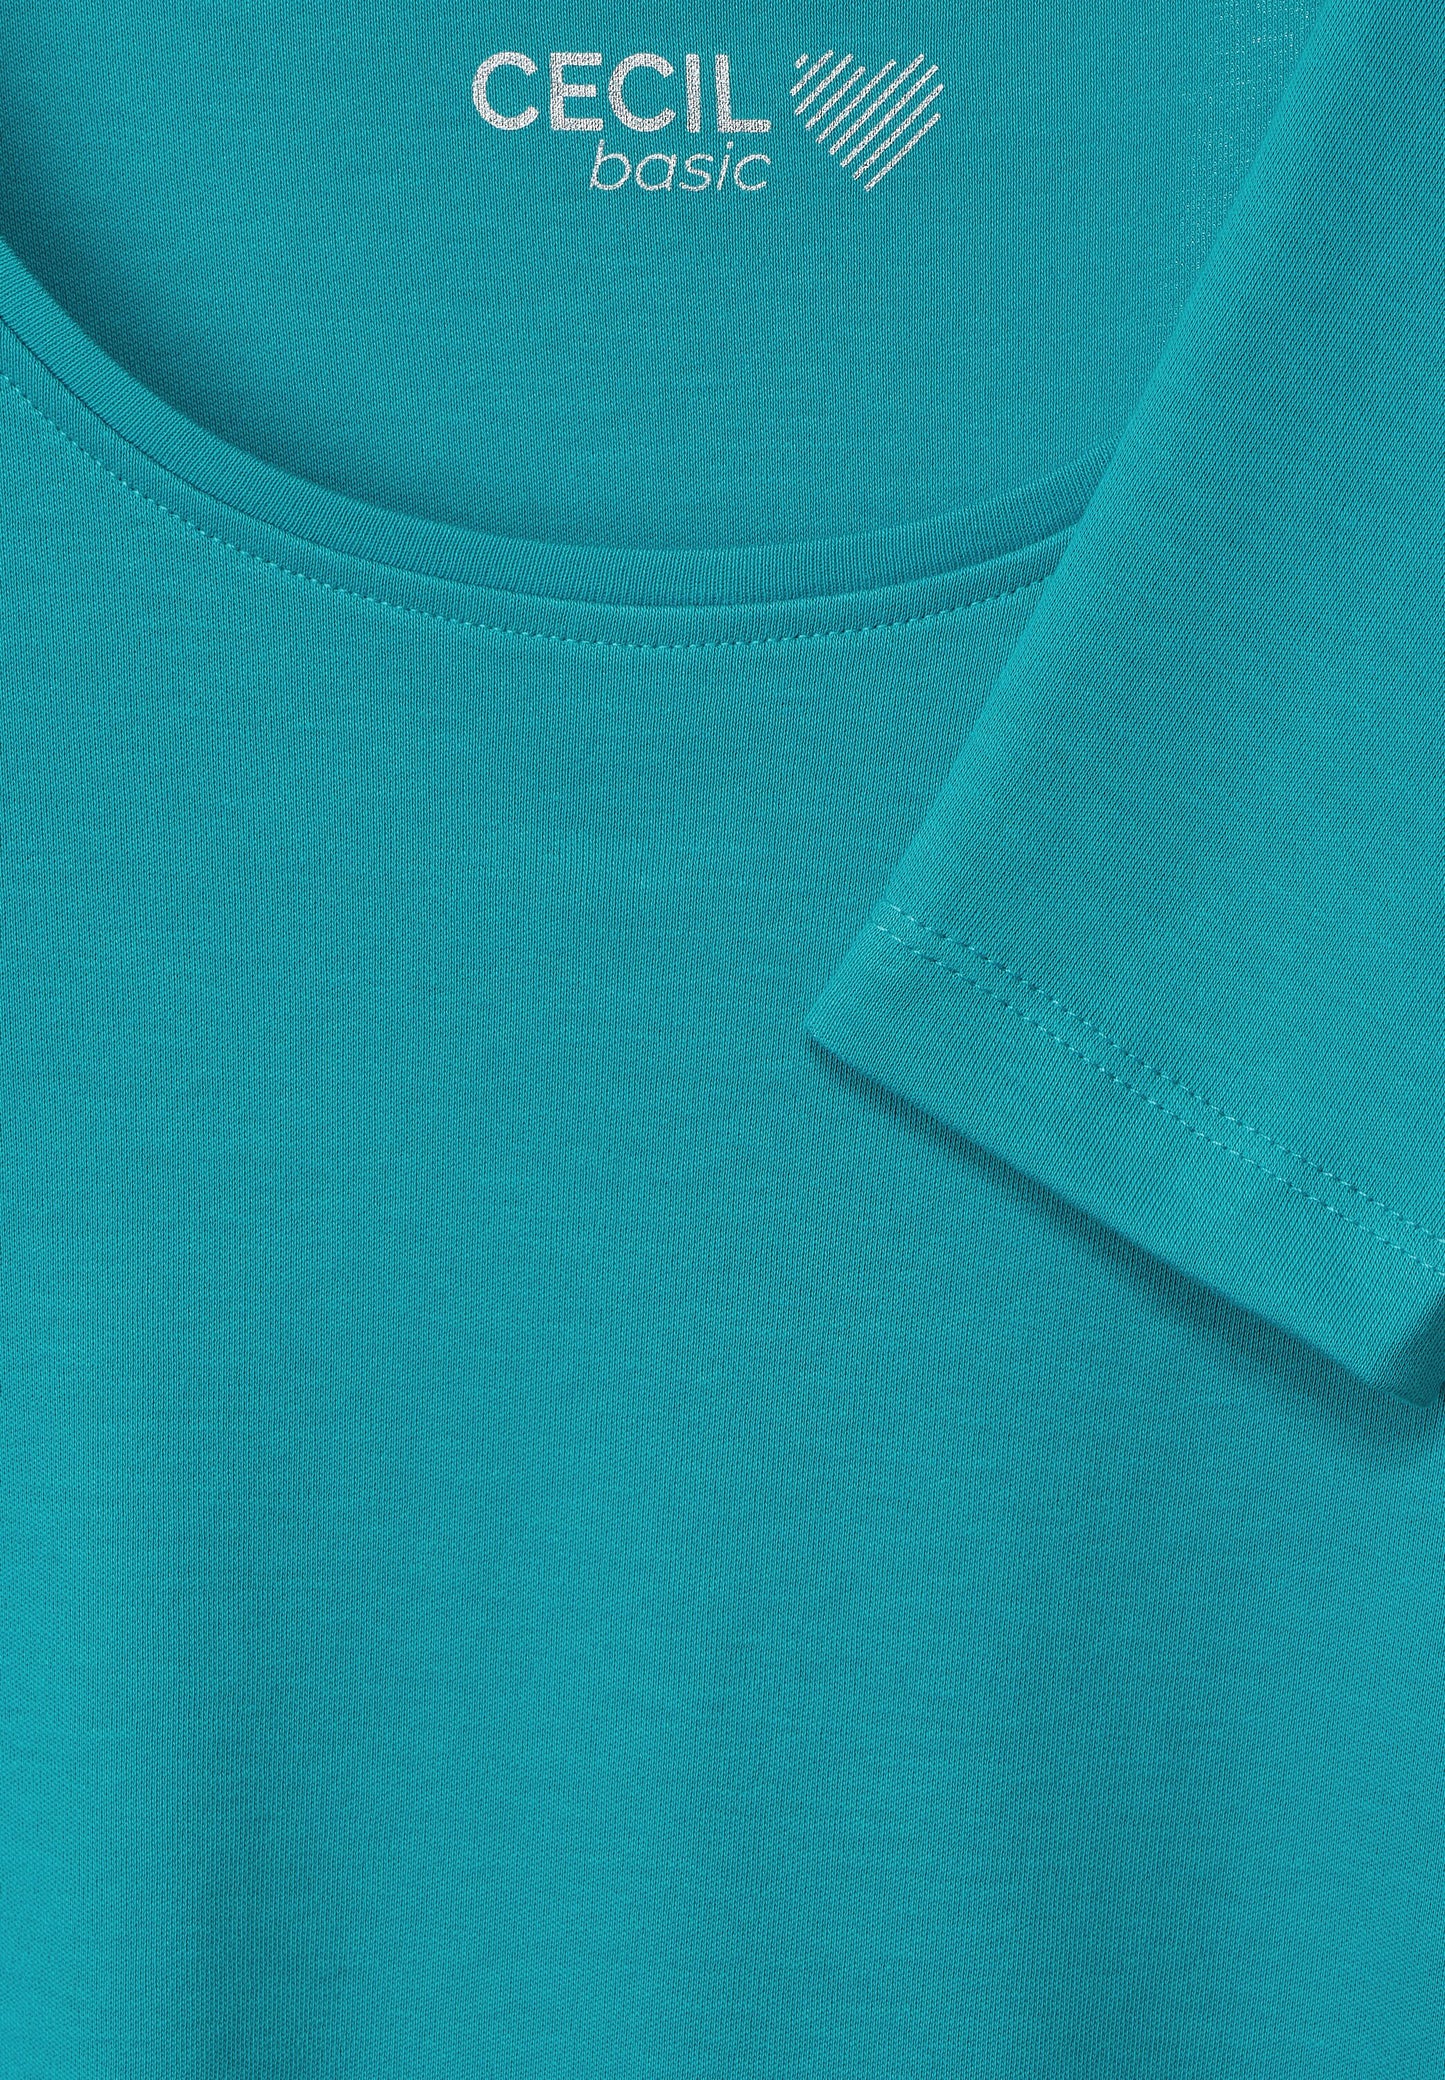 CECIL - Basic Langarmshirt - Farbe: frosted aqua blue